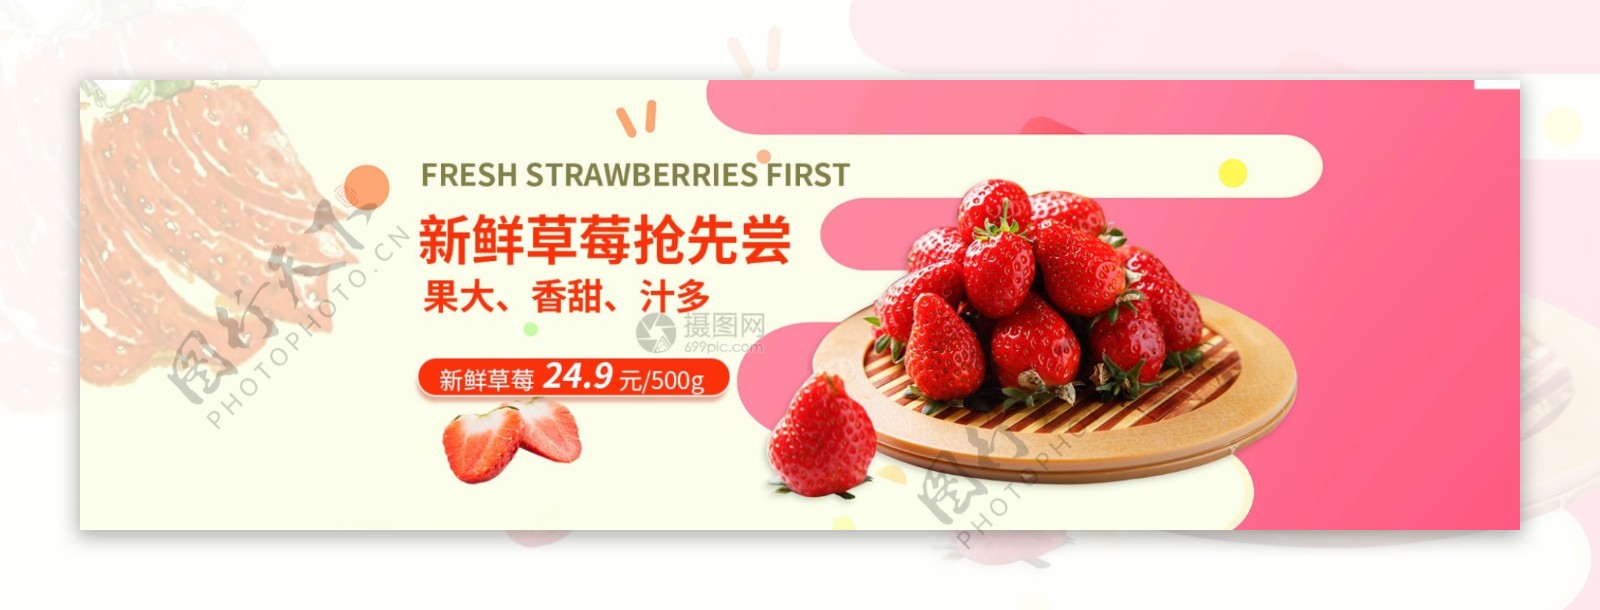 新鲜草莓水果促销淘宝banner